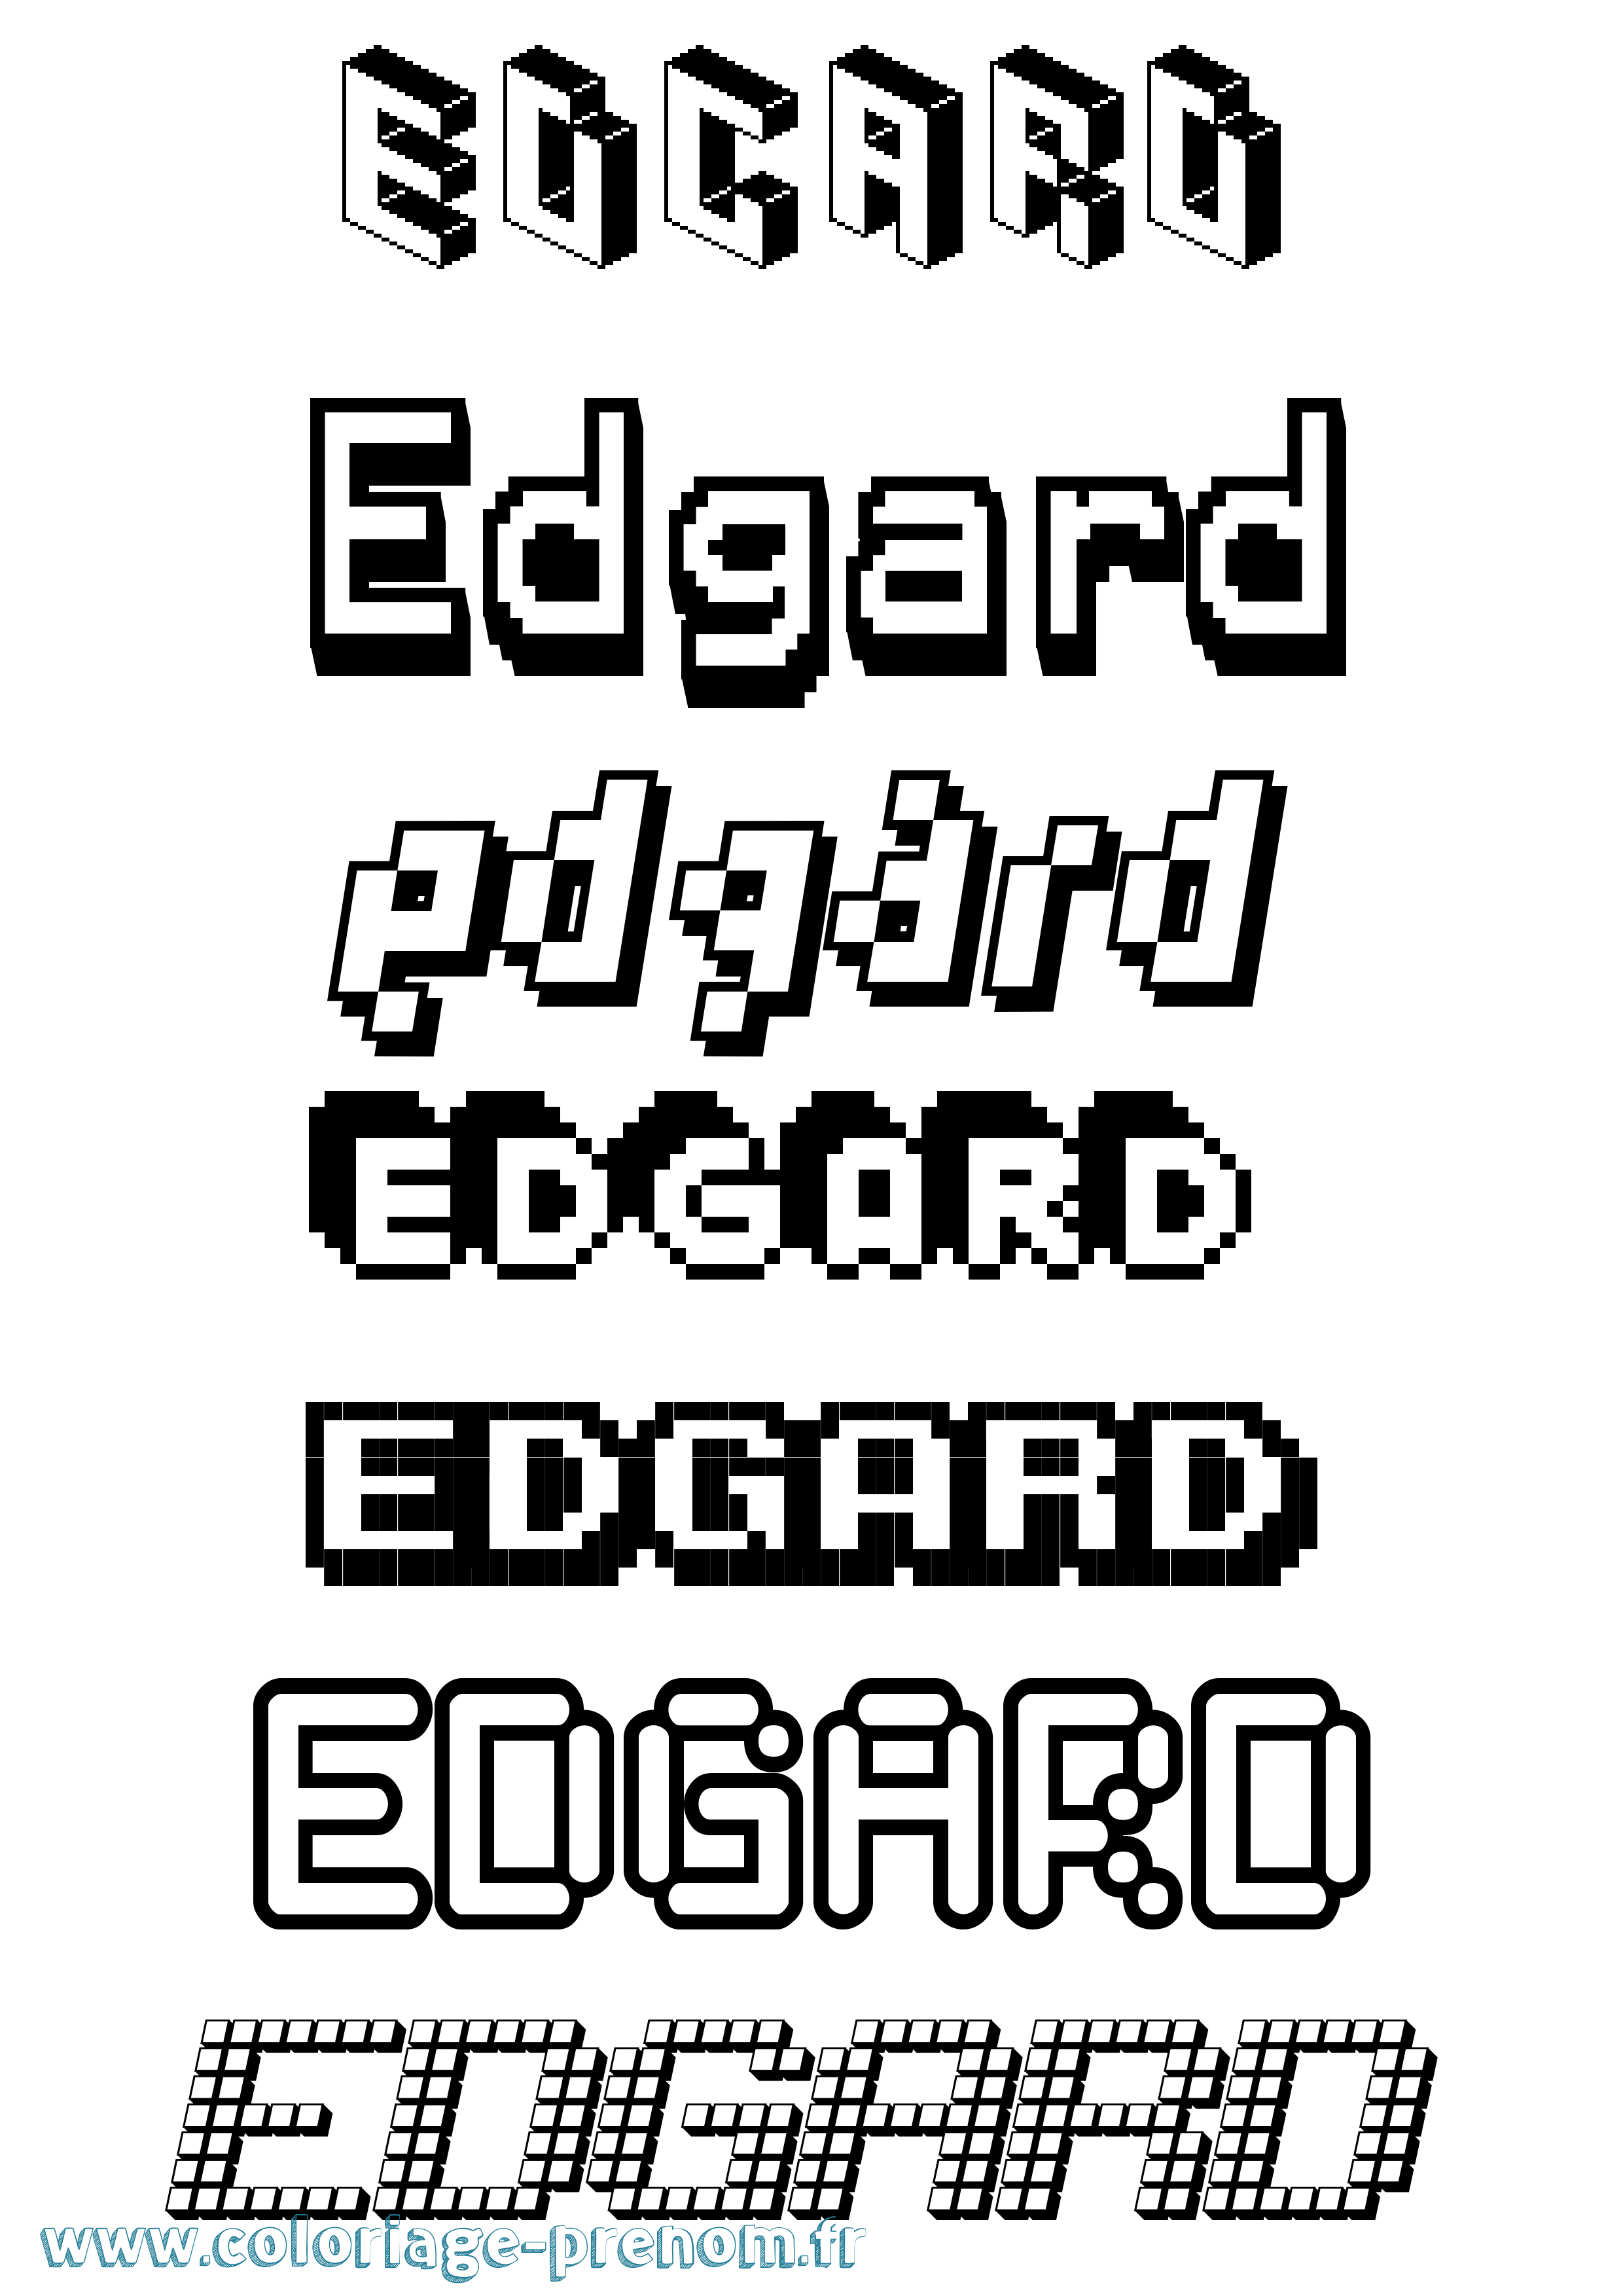 Coloriage prénom Edgard Pixel